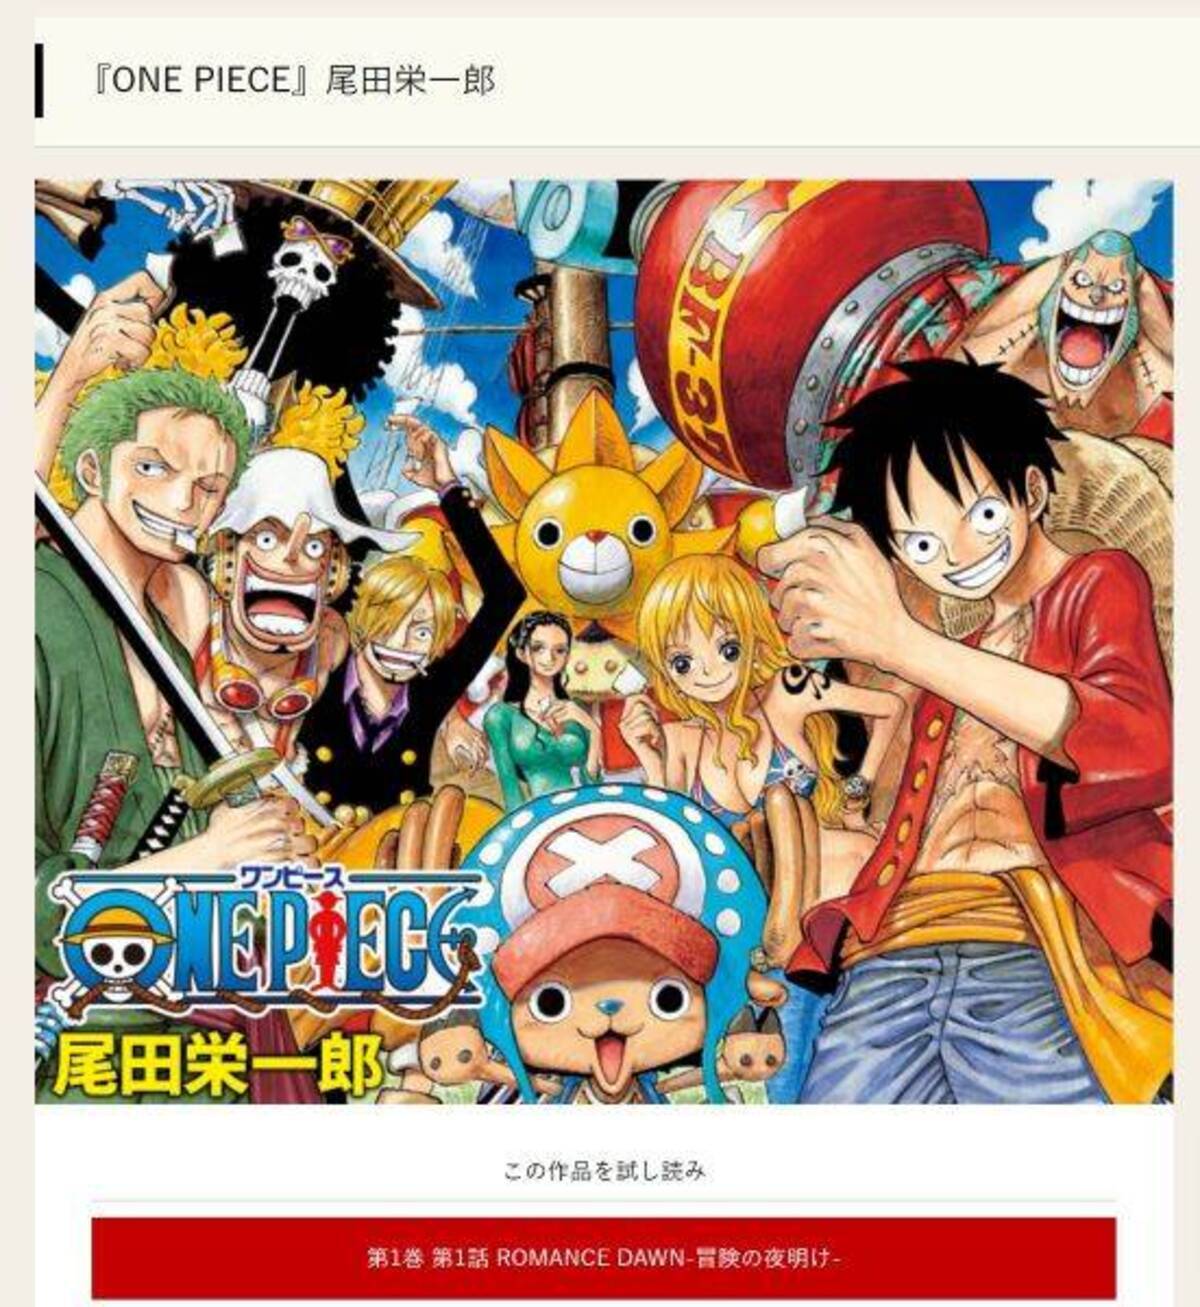 One Piece いまだ謎が残る4人の人物 イム様のラスボス説 ジョイボーイの役割とは 22年7月10日 エキサイトニュース 3 7